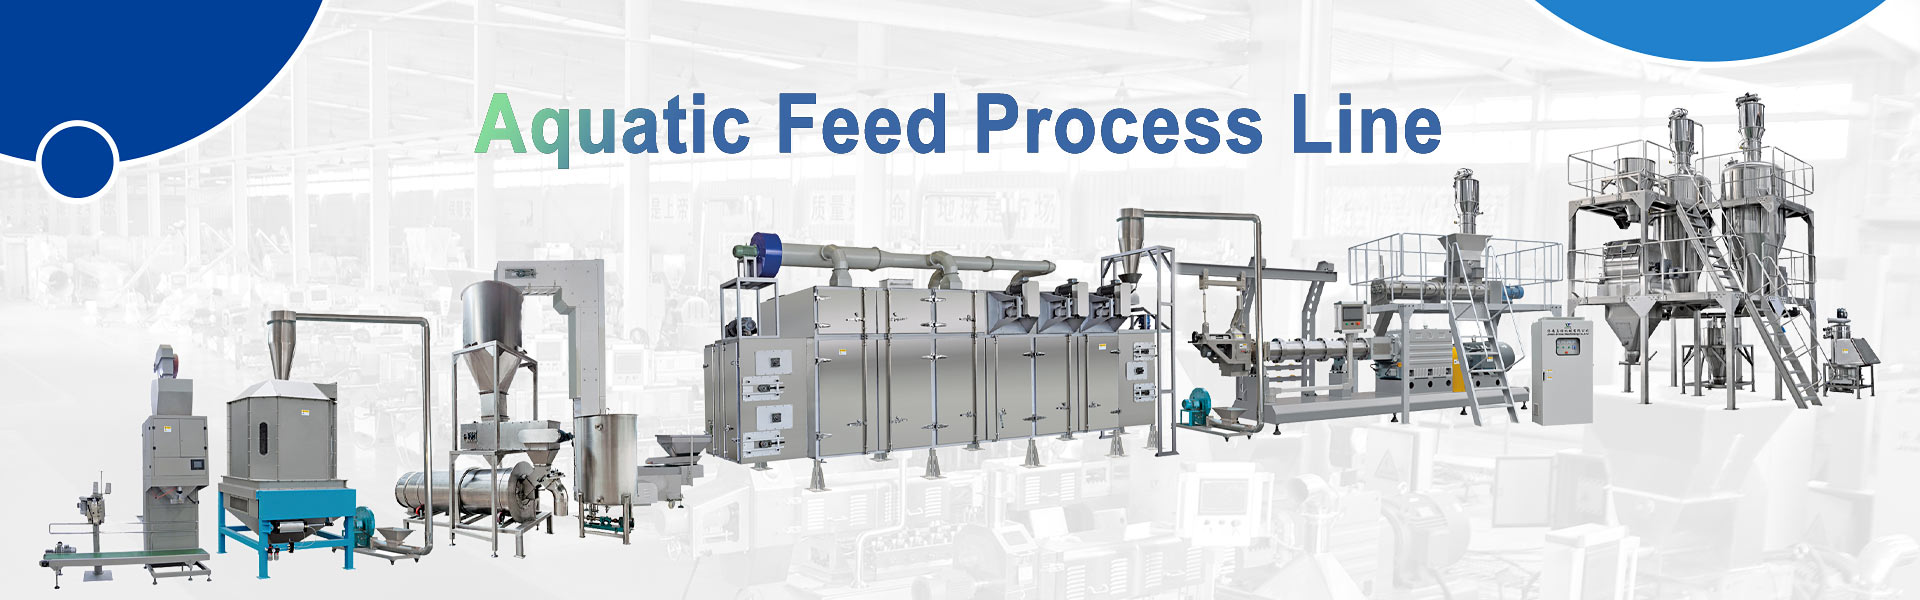 Aquatic-Feed-Process-Line